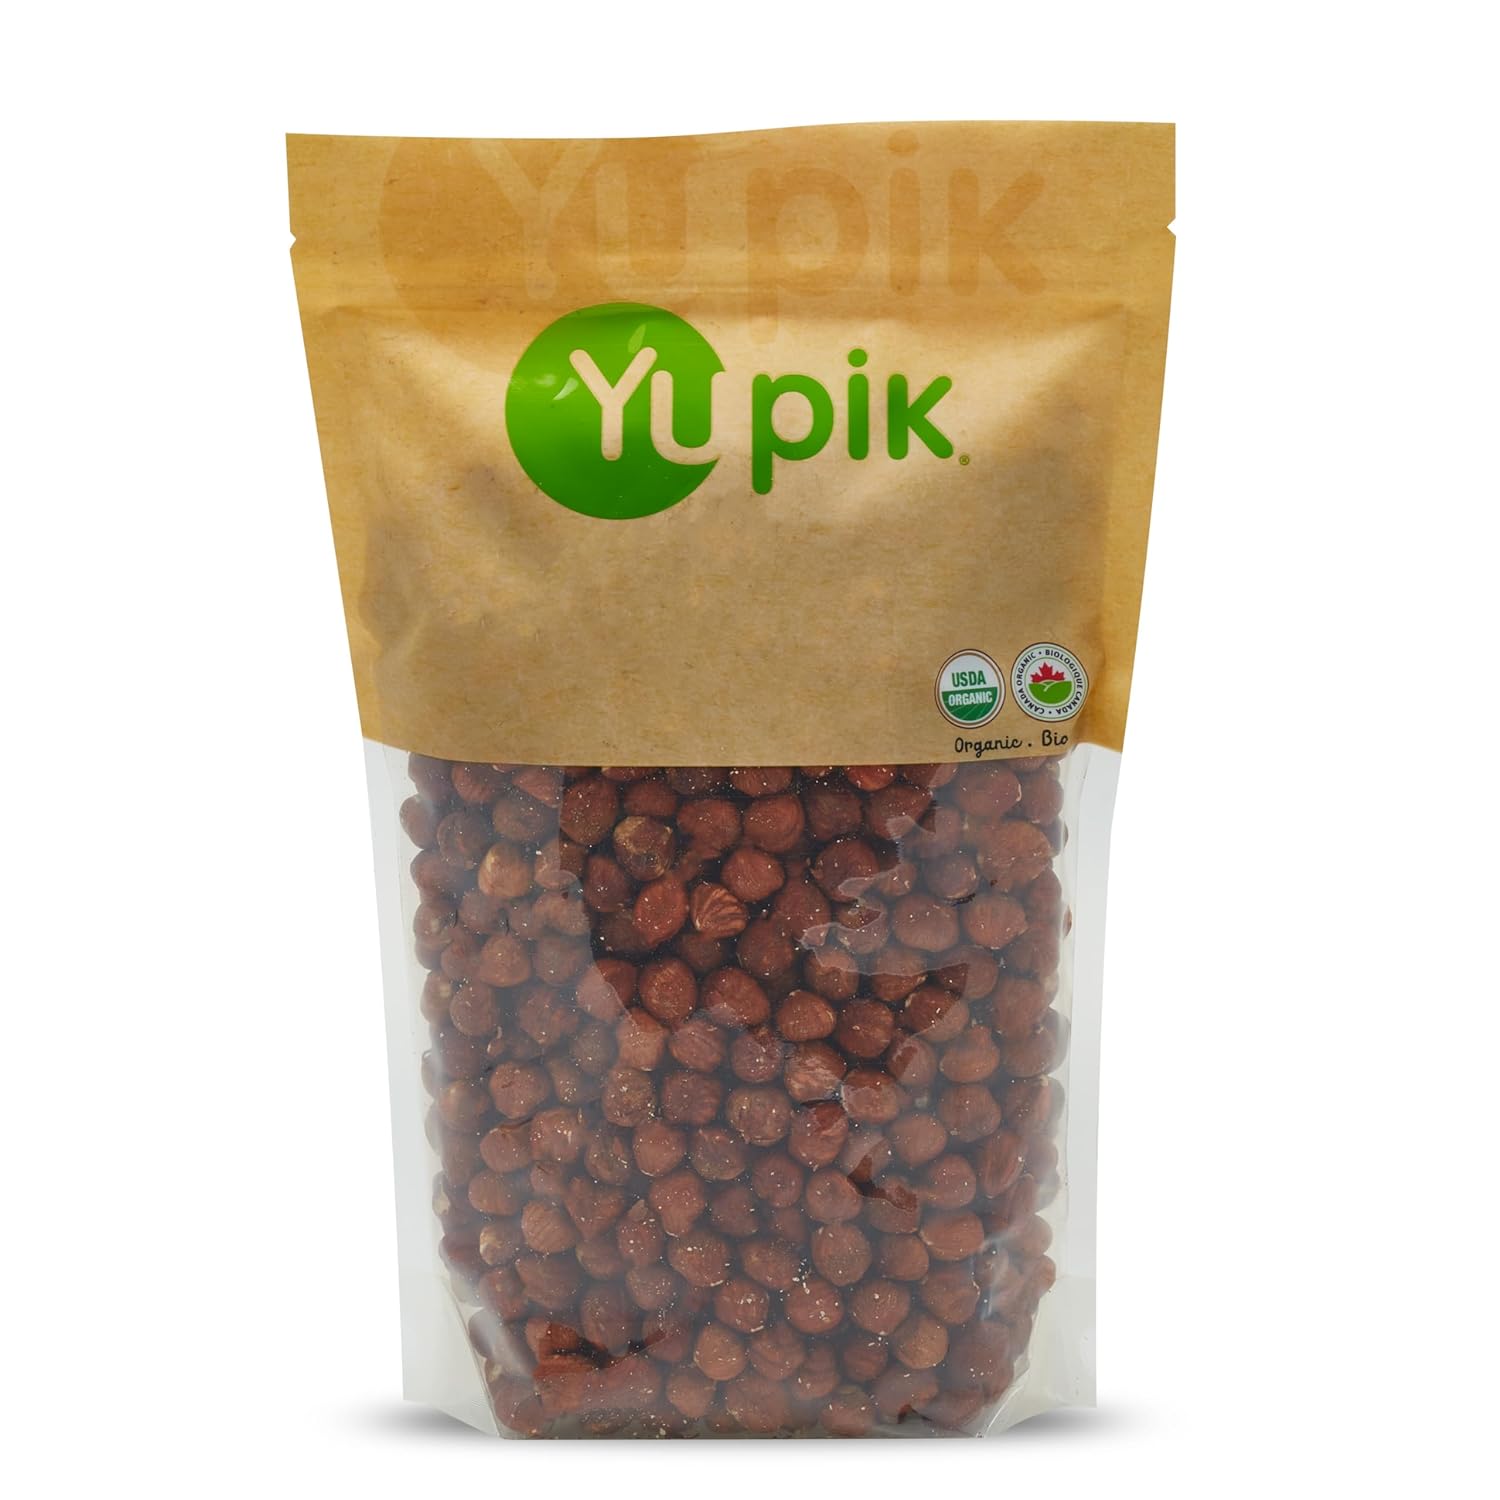 Yupik Nuts Organic Filbert Hazelnuts, 2.2 lb, Non-GMO, Vegan, Gluten-Free, Pack of 1